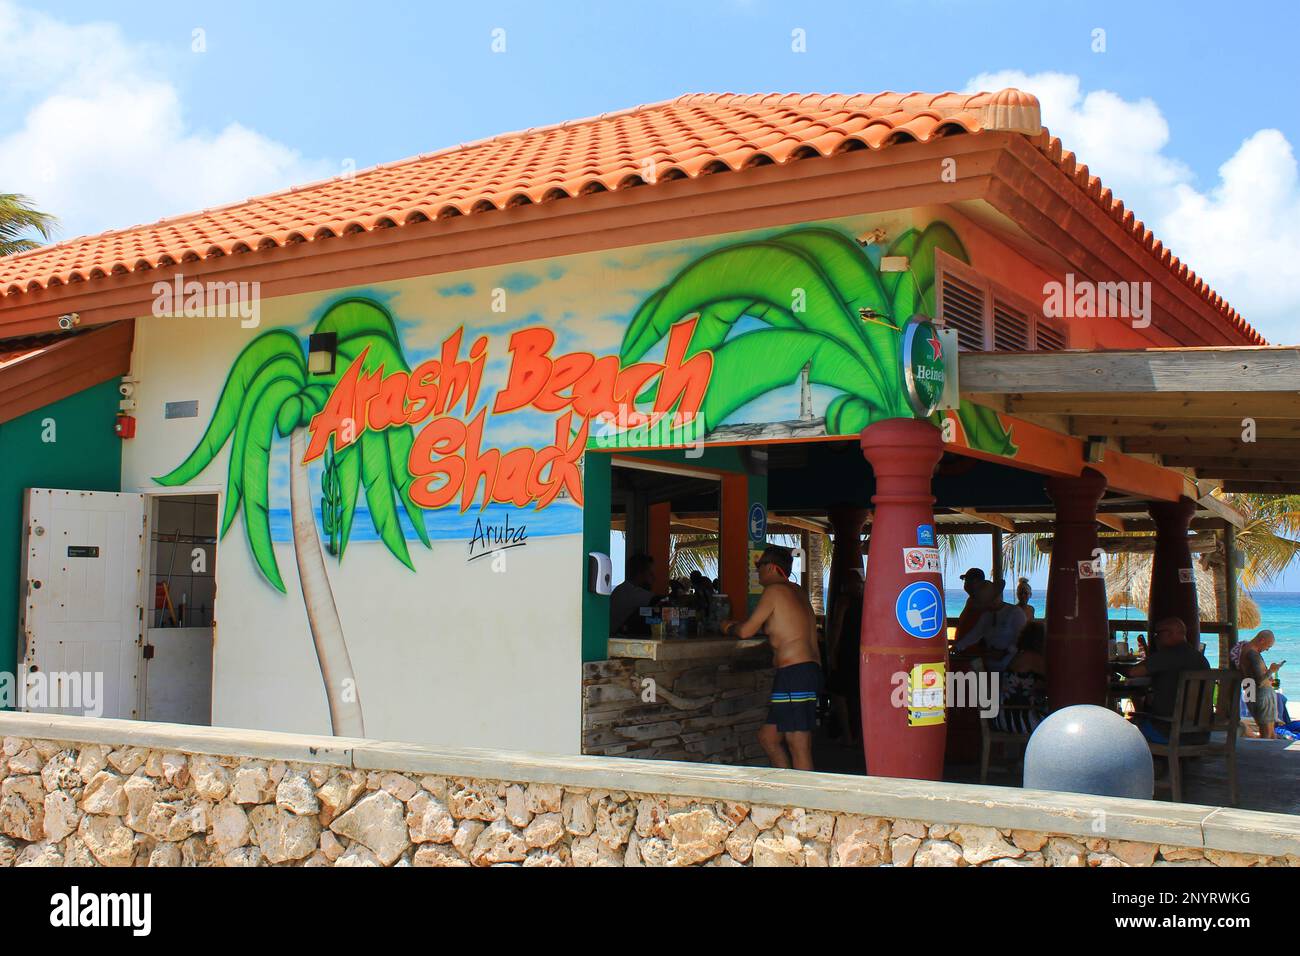 Arashi Beach, Noord, Aruba - 10 marzo 2022. Persone al bar, Arashi Beach Shack. Foto Stock